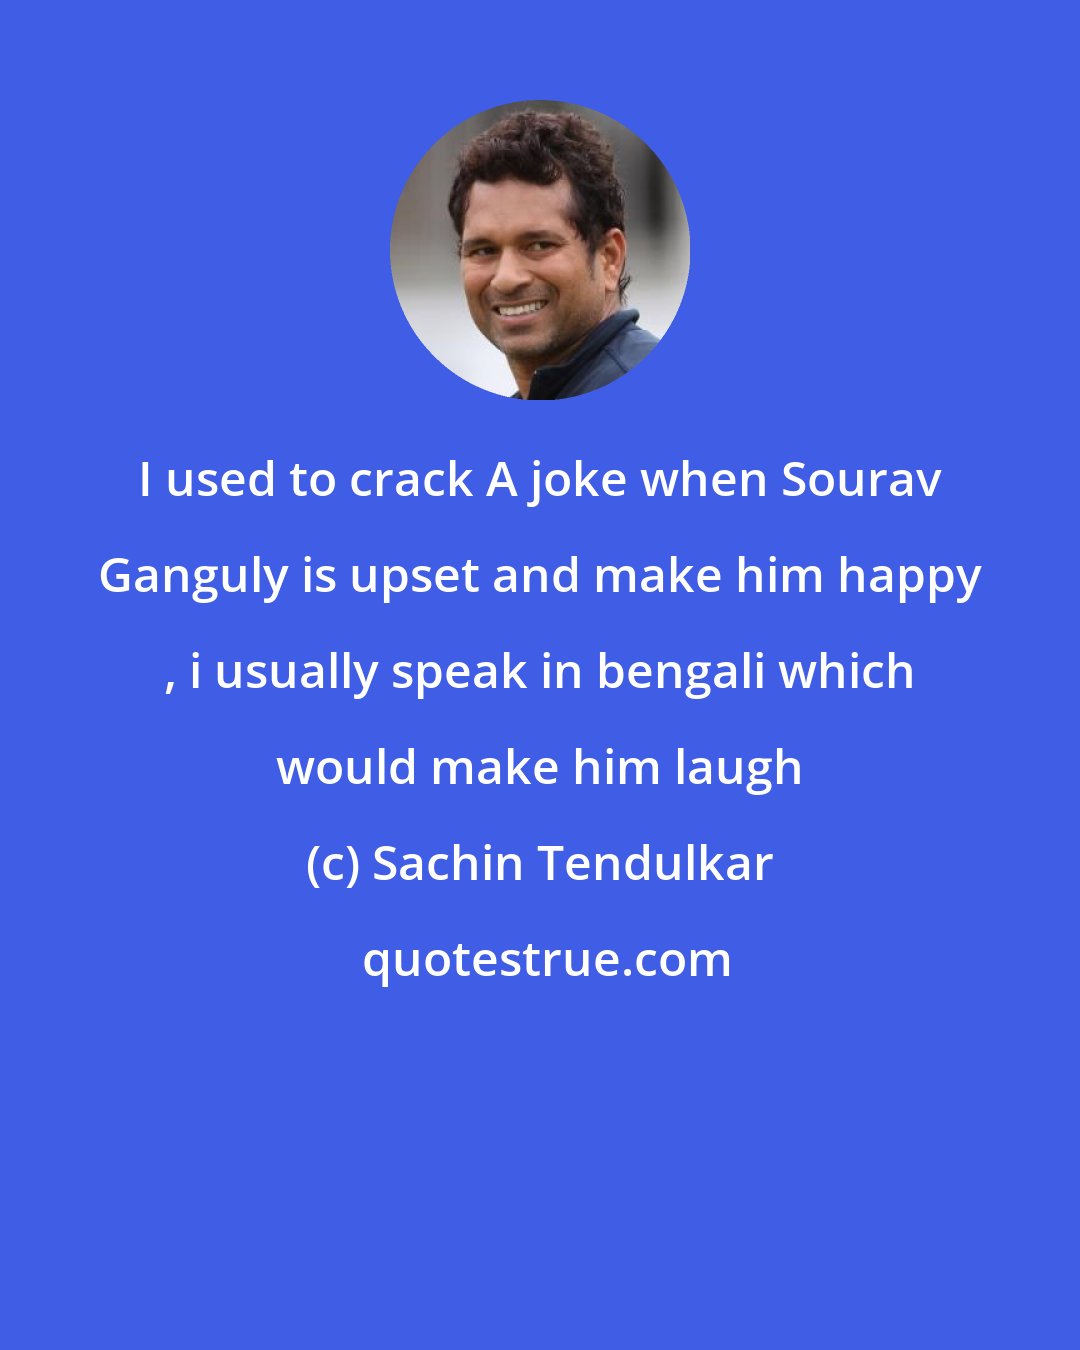 Sachin Tendulkar: I used to crack A joke when Sourav Ganguly is upset and make him happy , i usually speak in bengali which would make him laugh